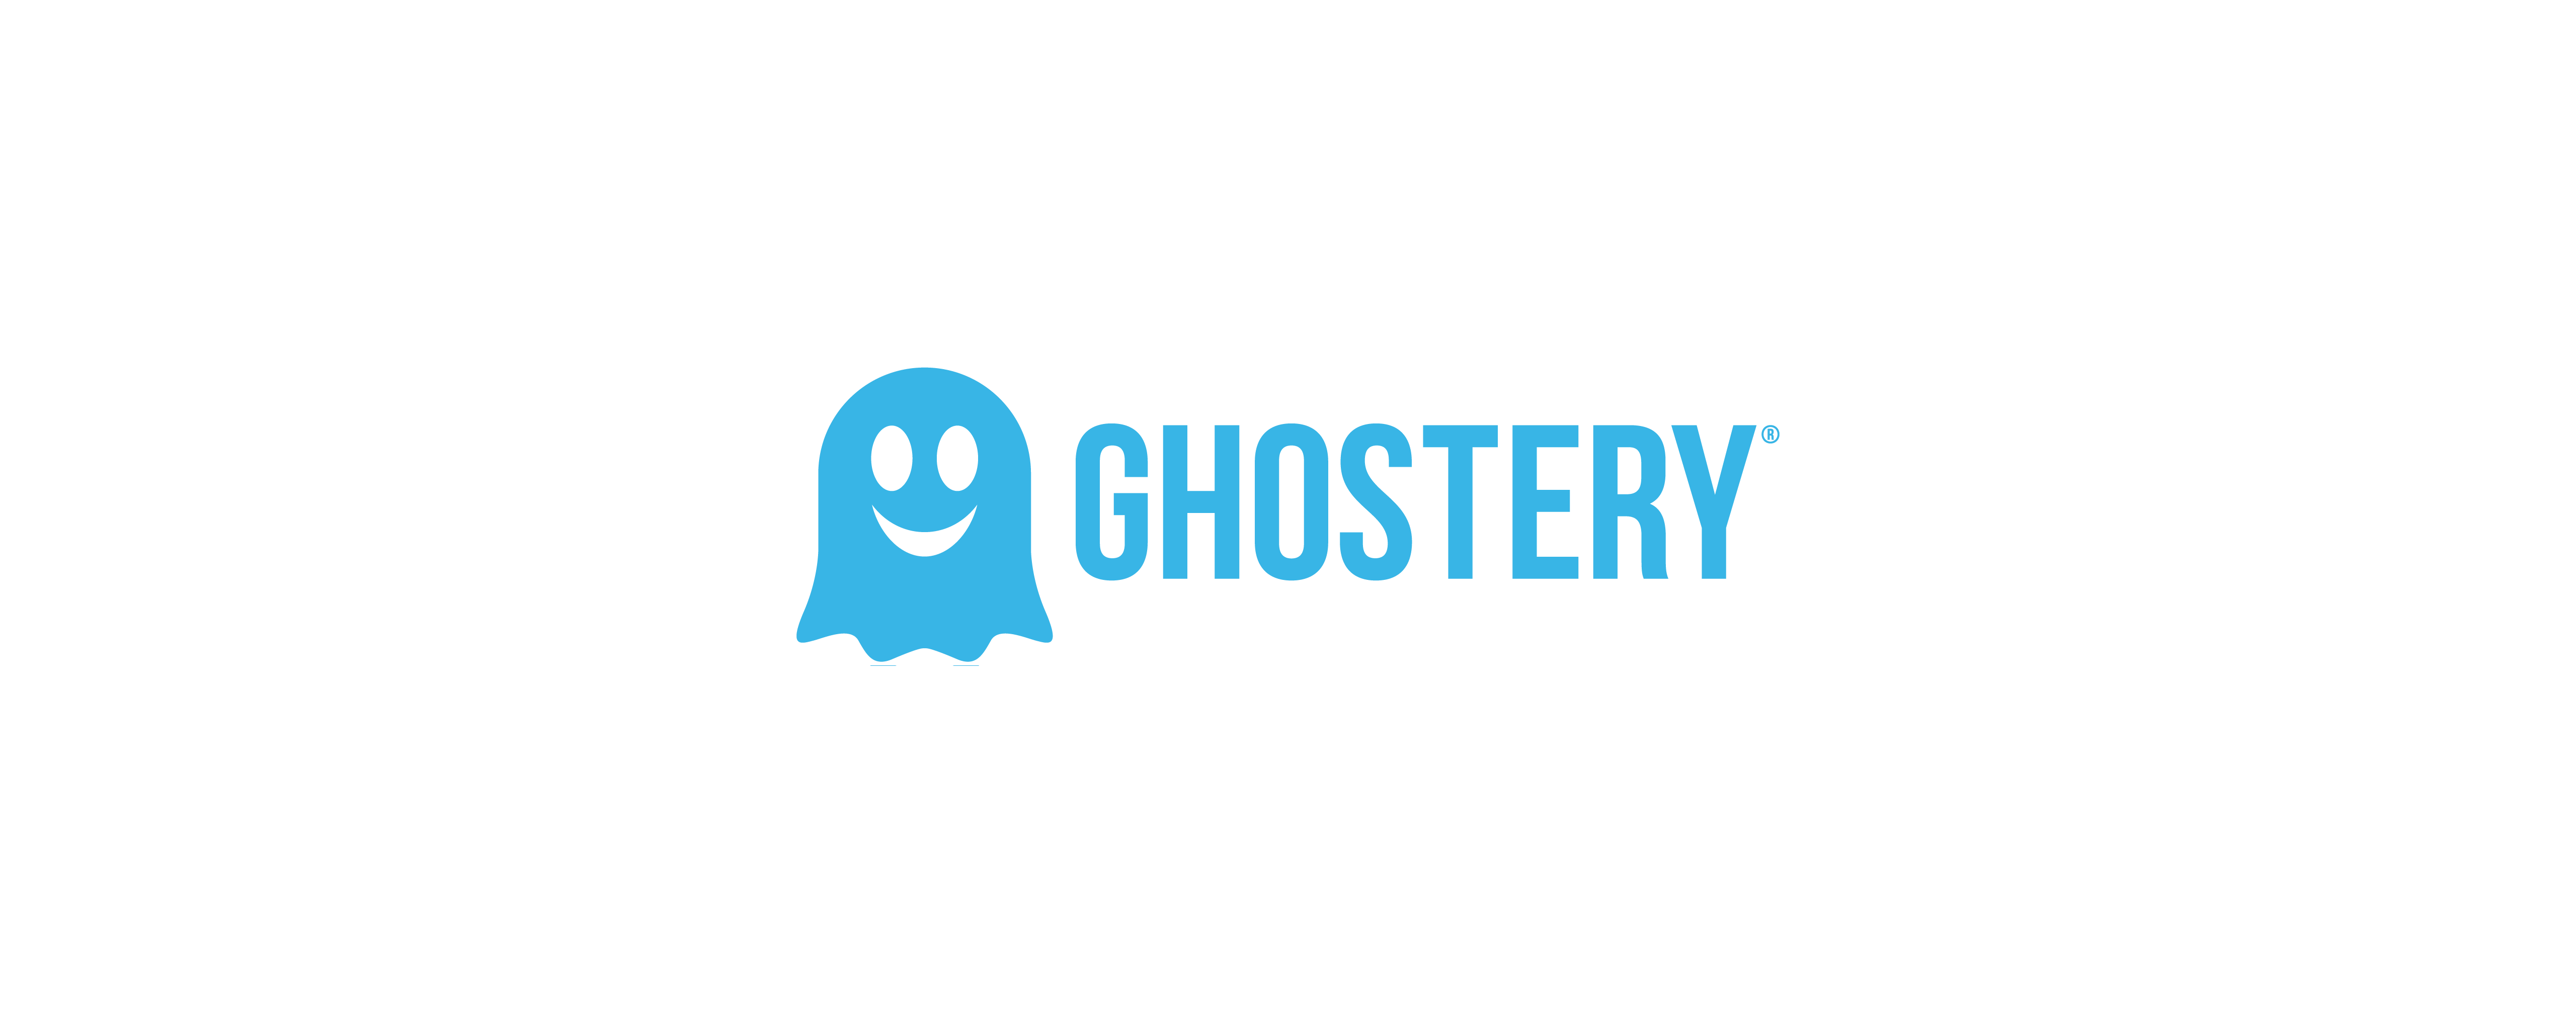 ghostery rewards